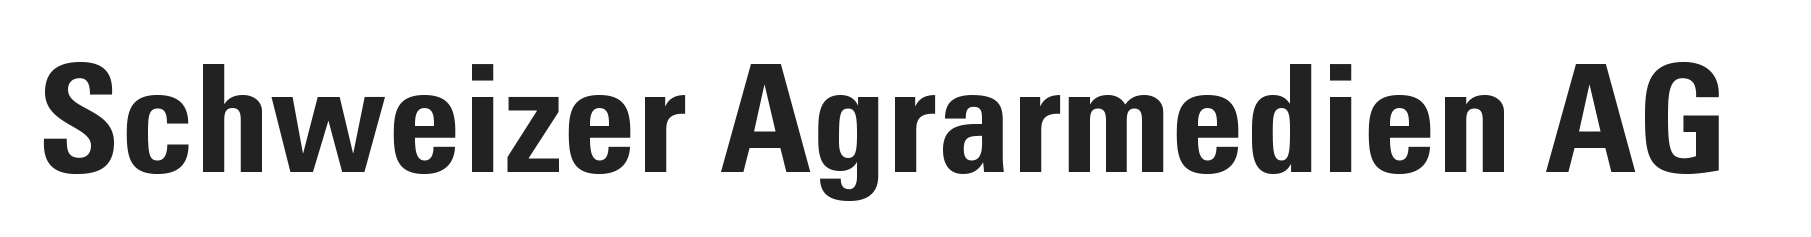 Logo-Schweizer-Agrarmedien.jpg